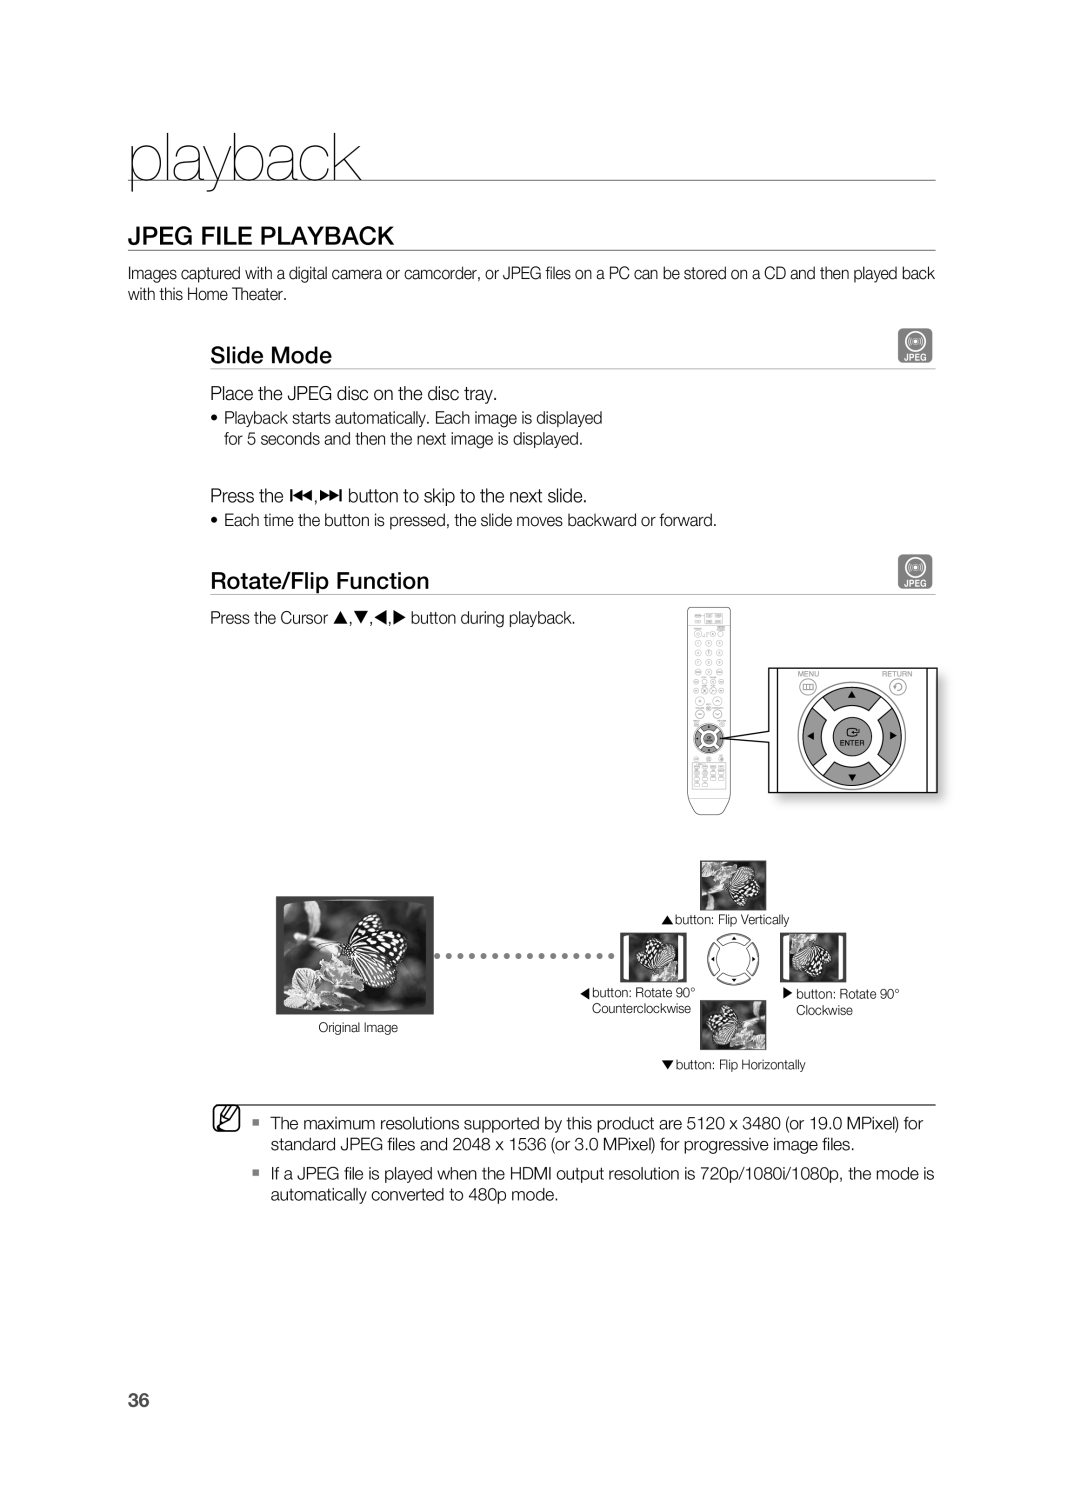 Samsung HT-TWZ415 user manual JPEg FILE PLAYBACK, playback, Slide Mode, rotate/Flip Function 